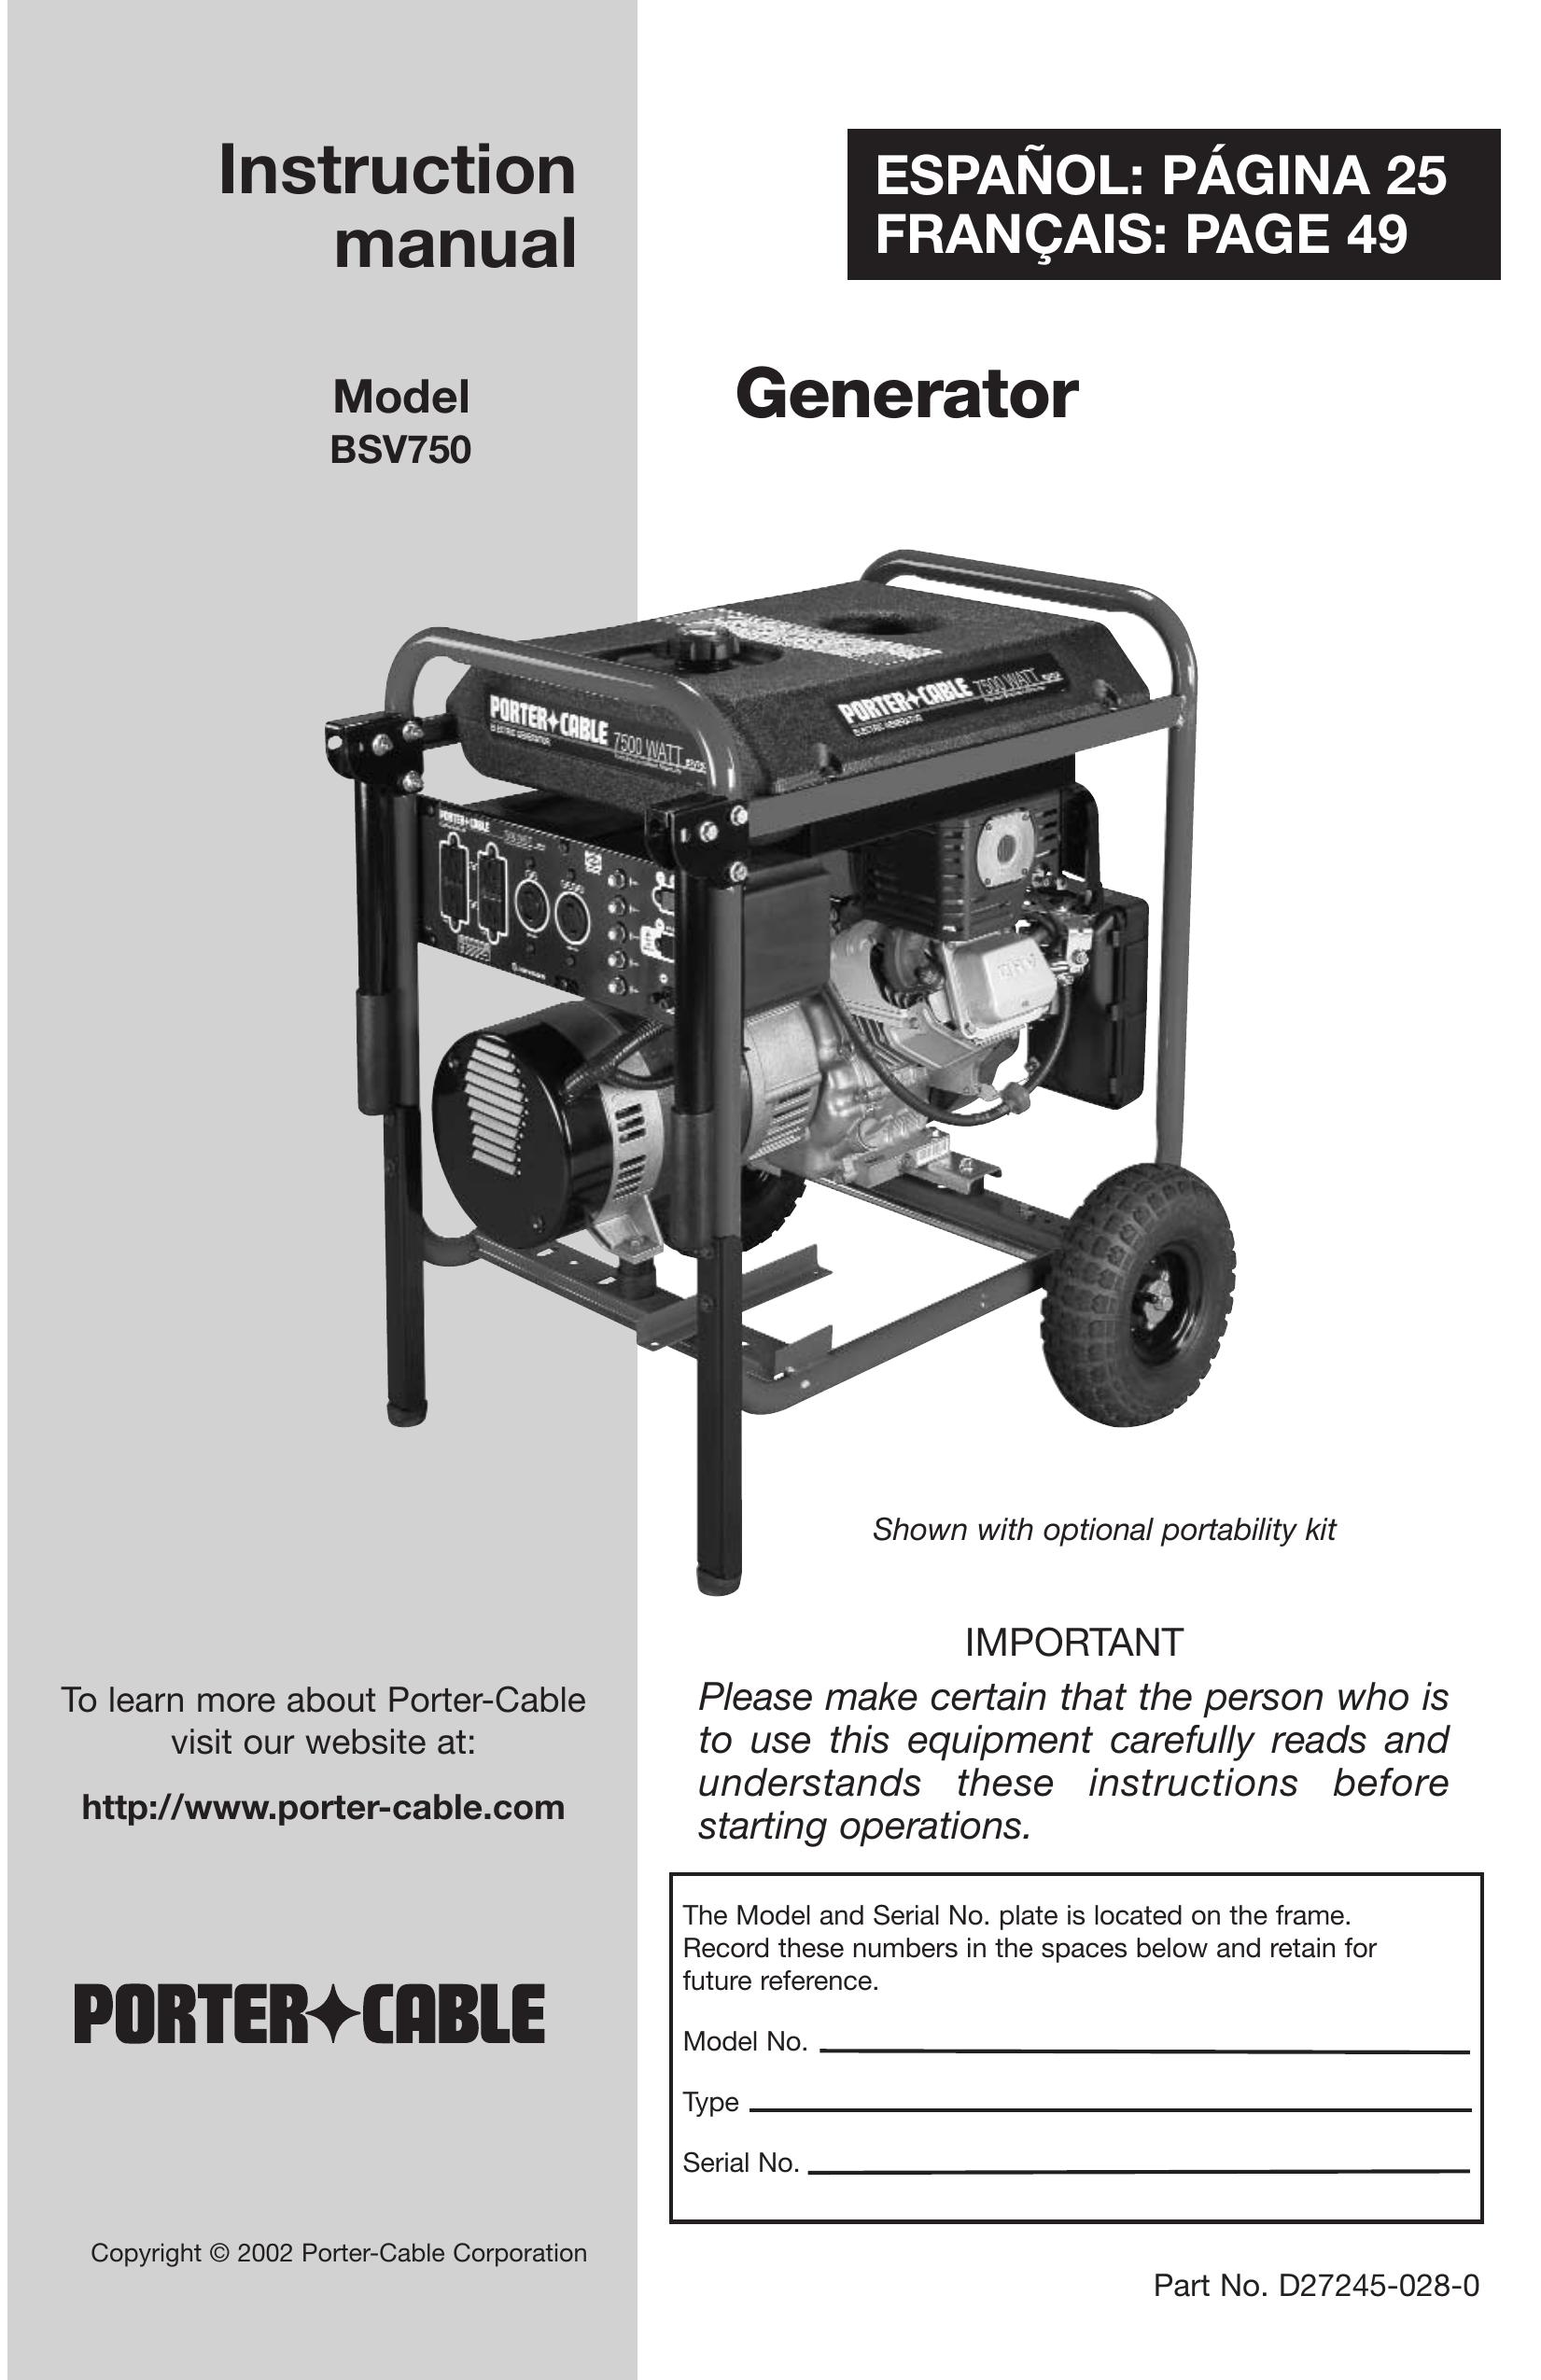 Porter-Cable D27245-028-0 Portable Generator User Manual